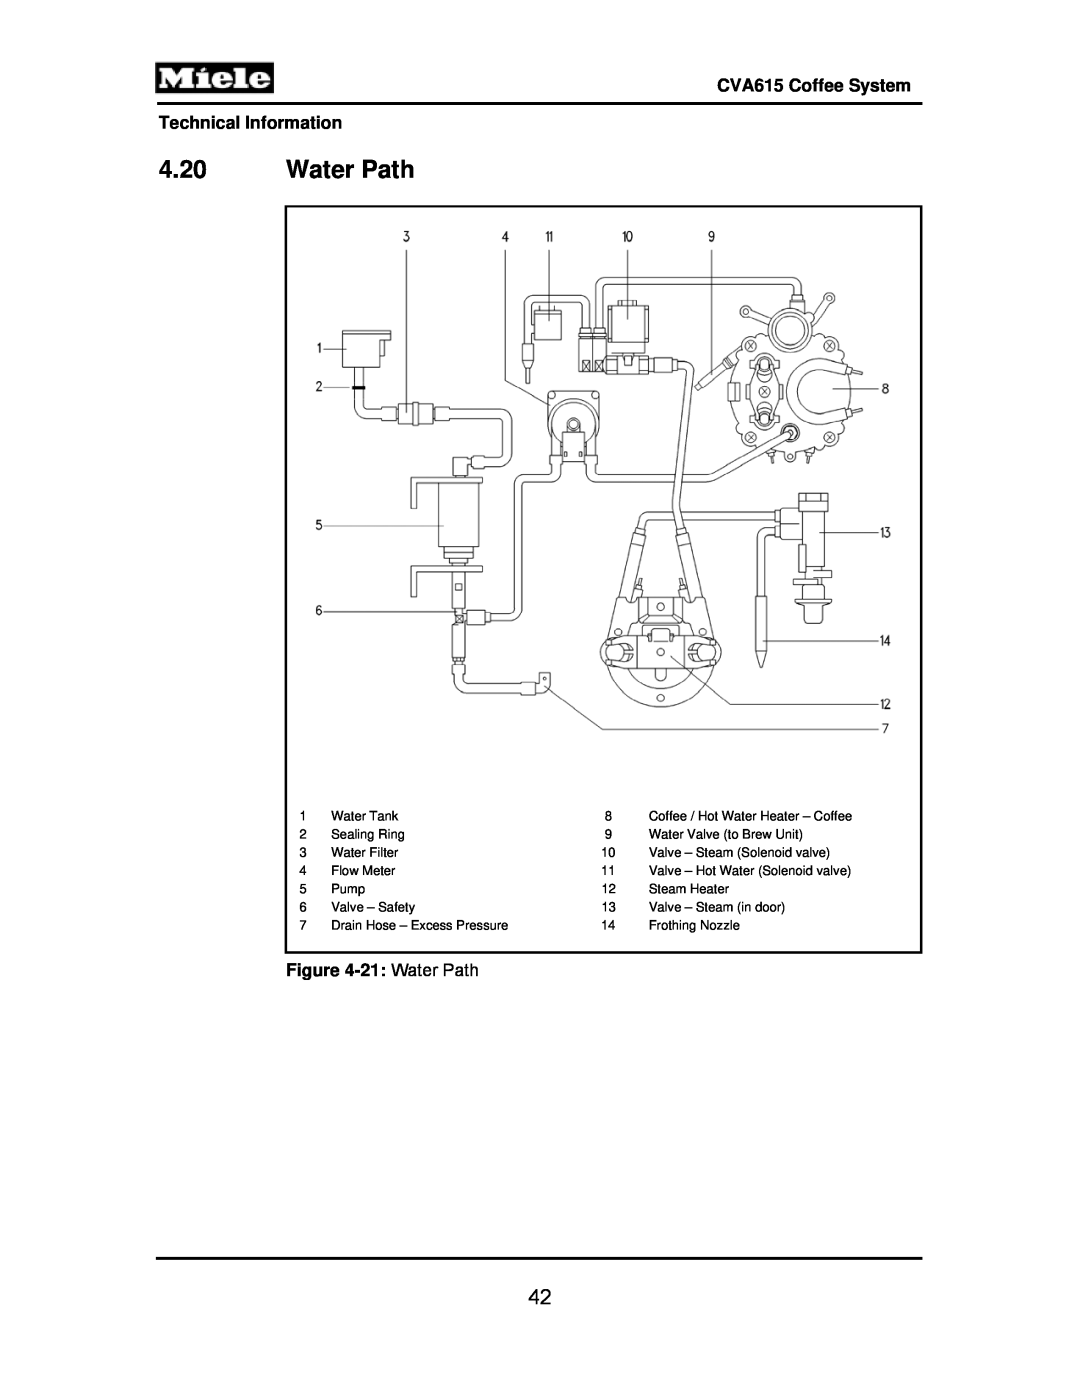 Miele manual 4.20Water Path, CVA615 Coffee System Technical Information, 21: Water Path 